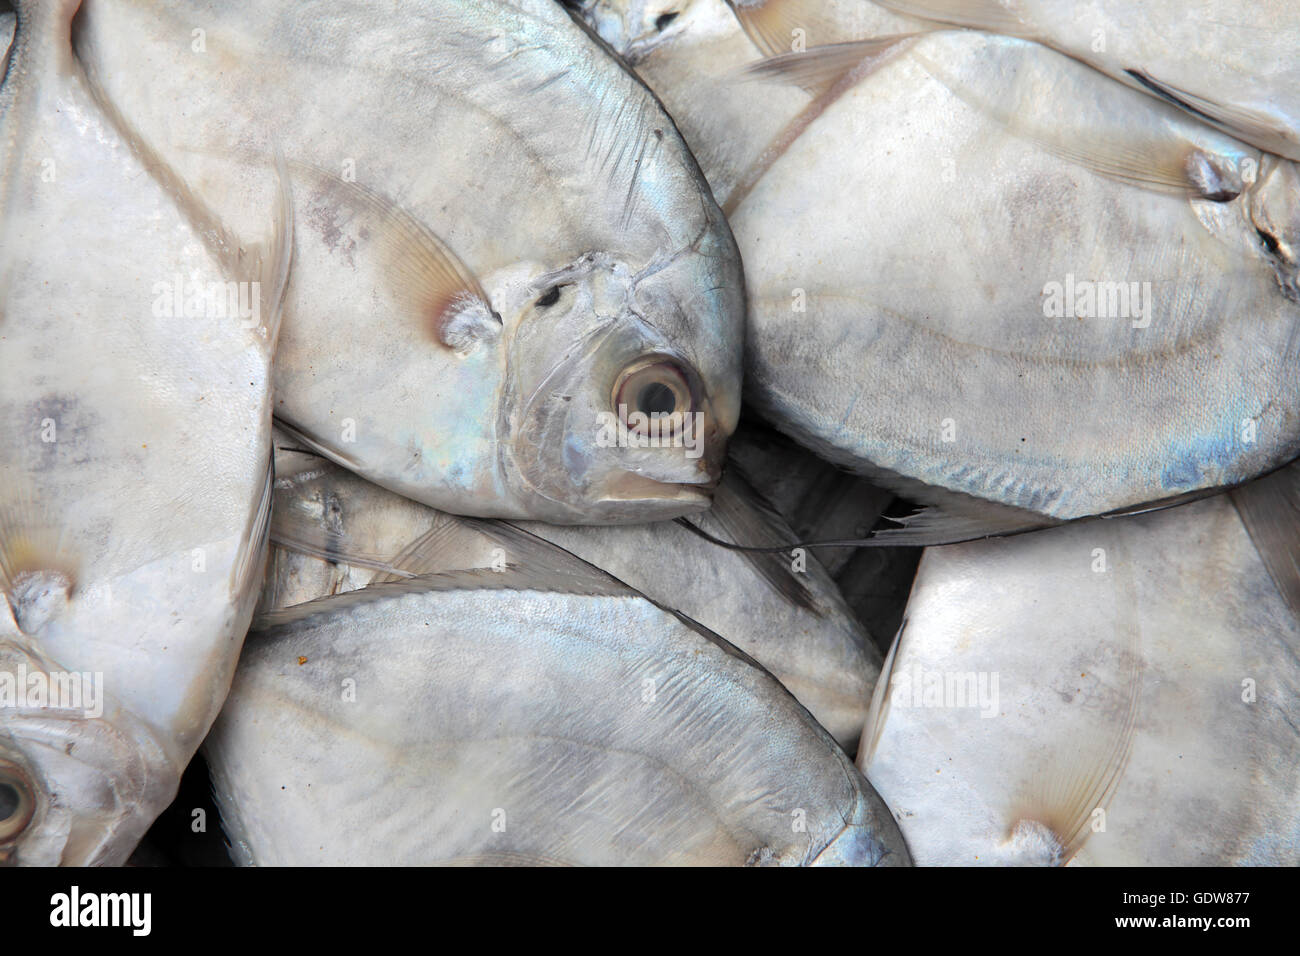 sea fish pomfret Stock Photo